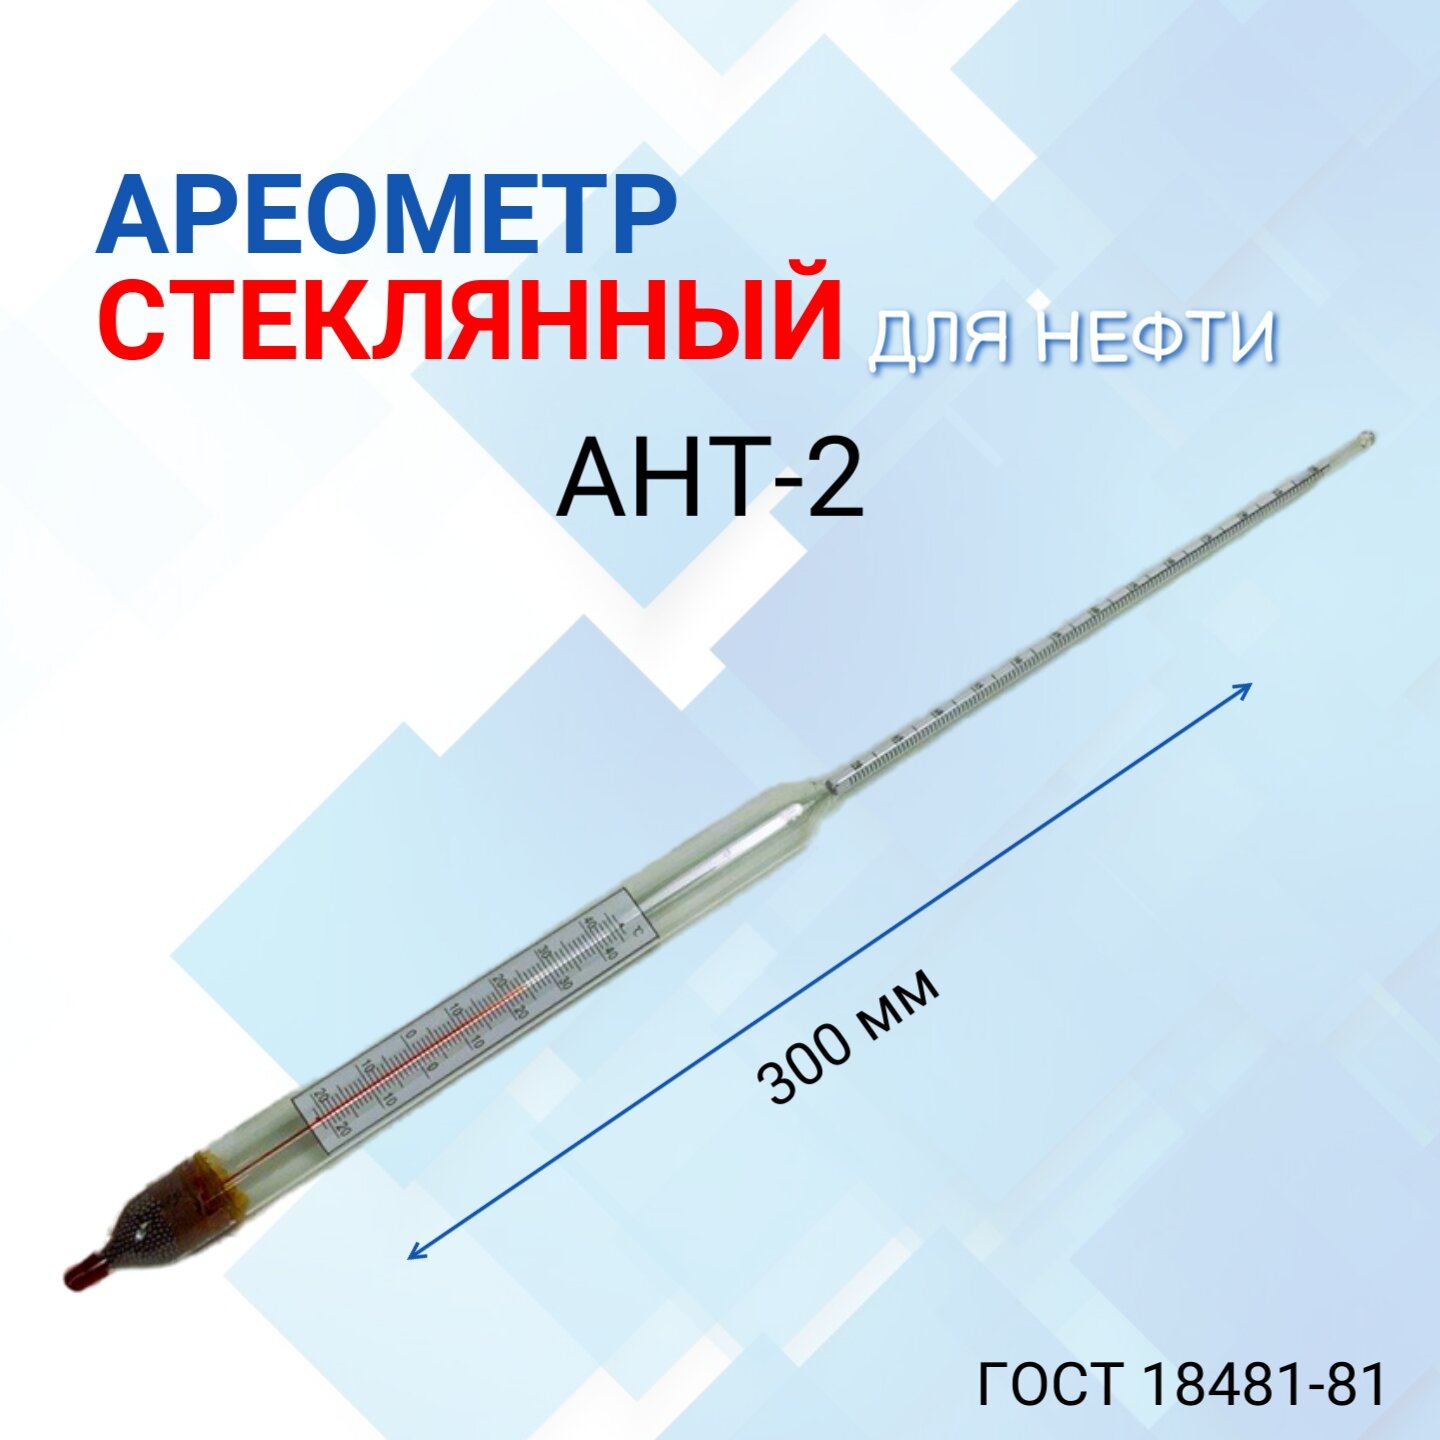 Ареометр "АНТ-2" 750-830 с поверкой РФ